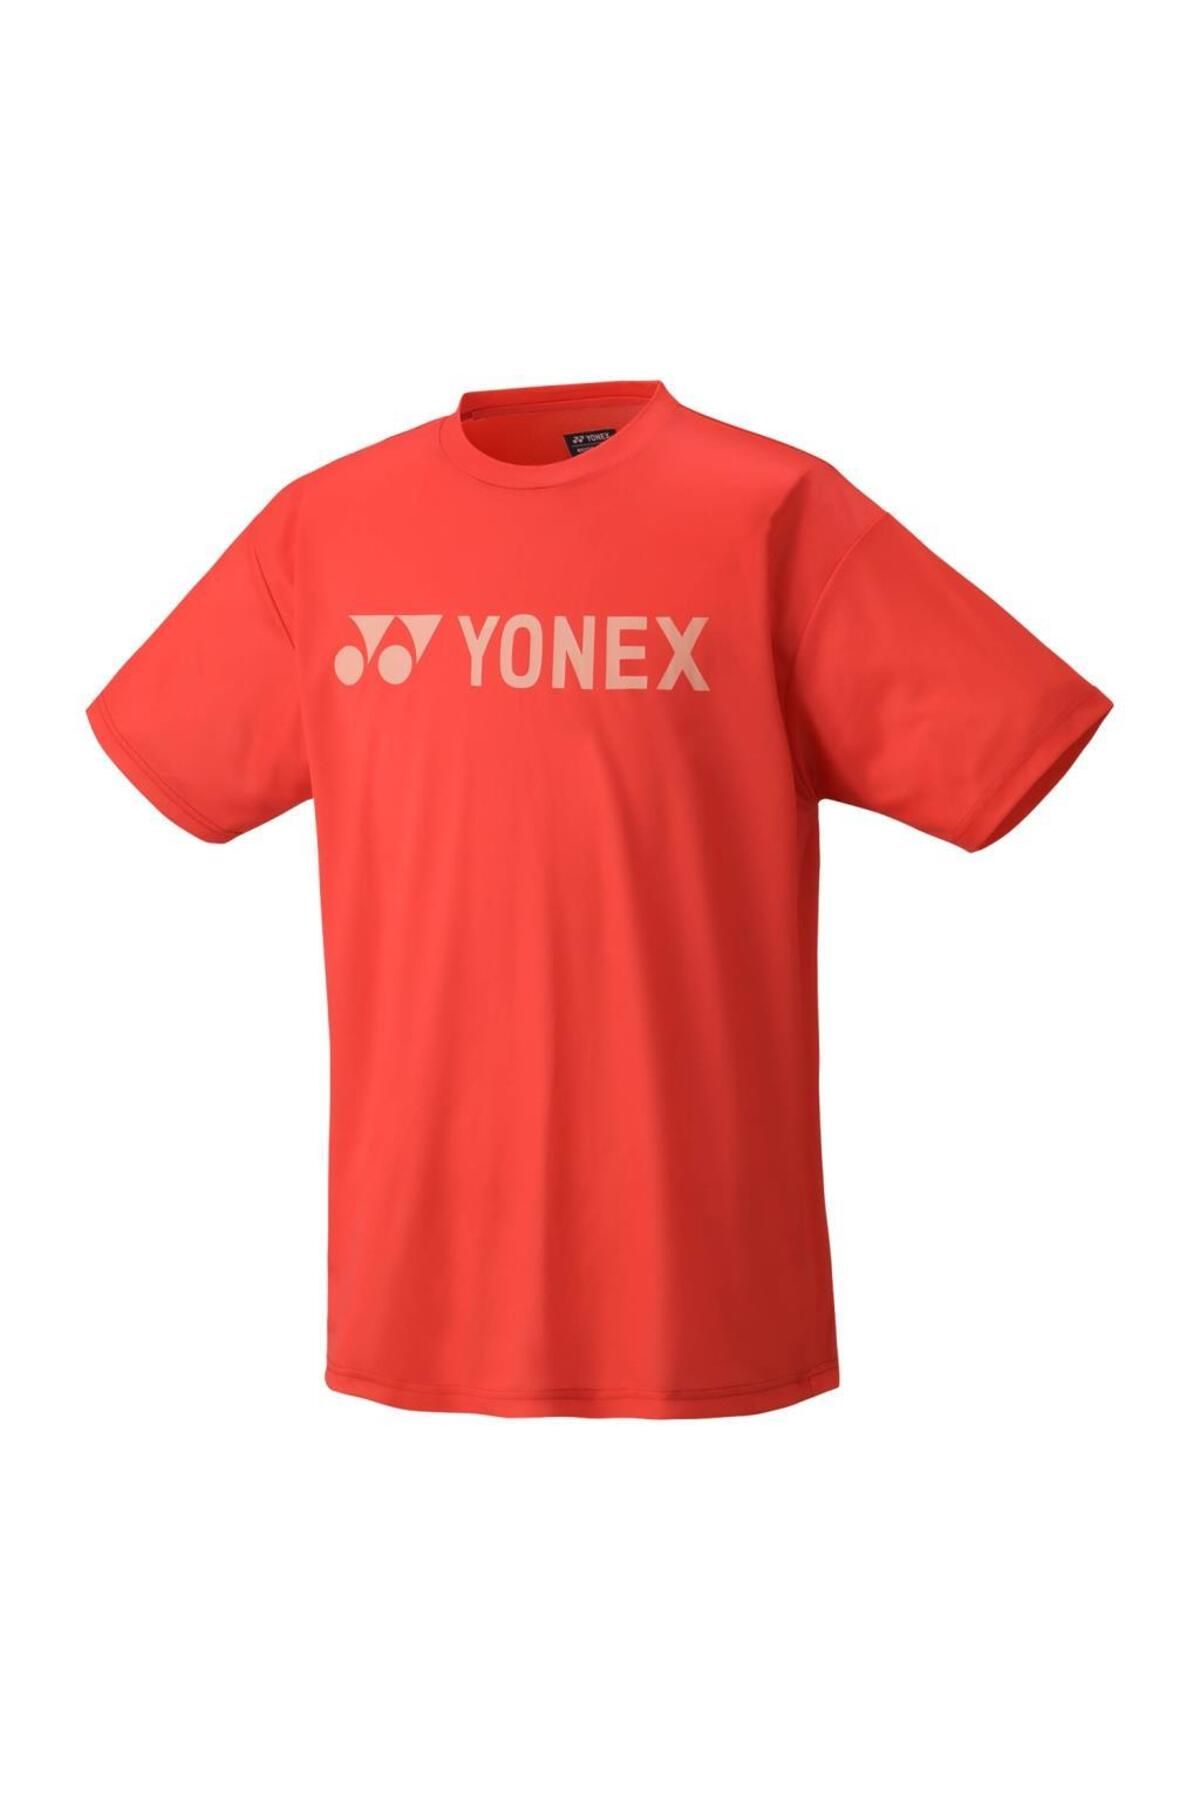 Yonex Tshirt Mercan Erkek YM0046